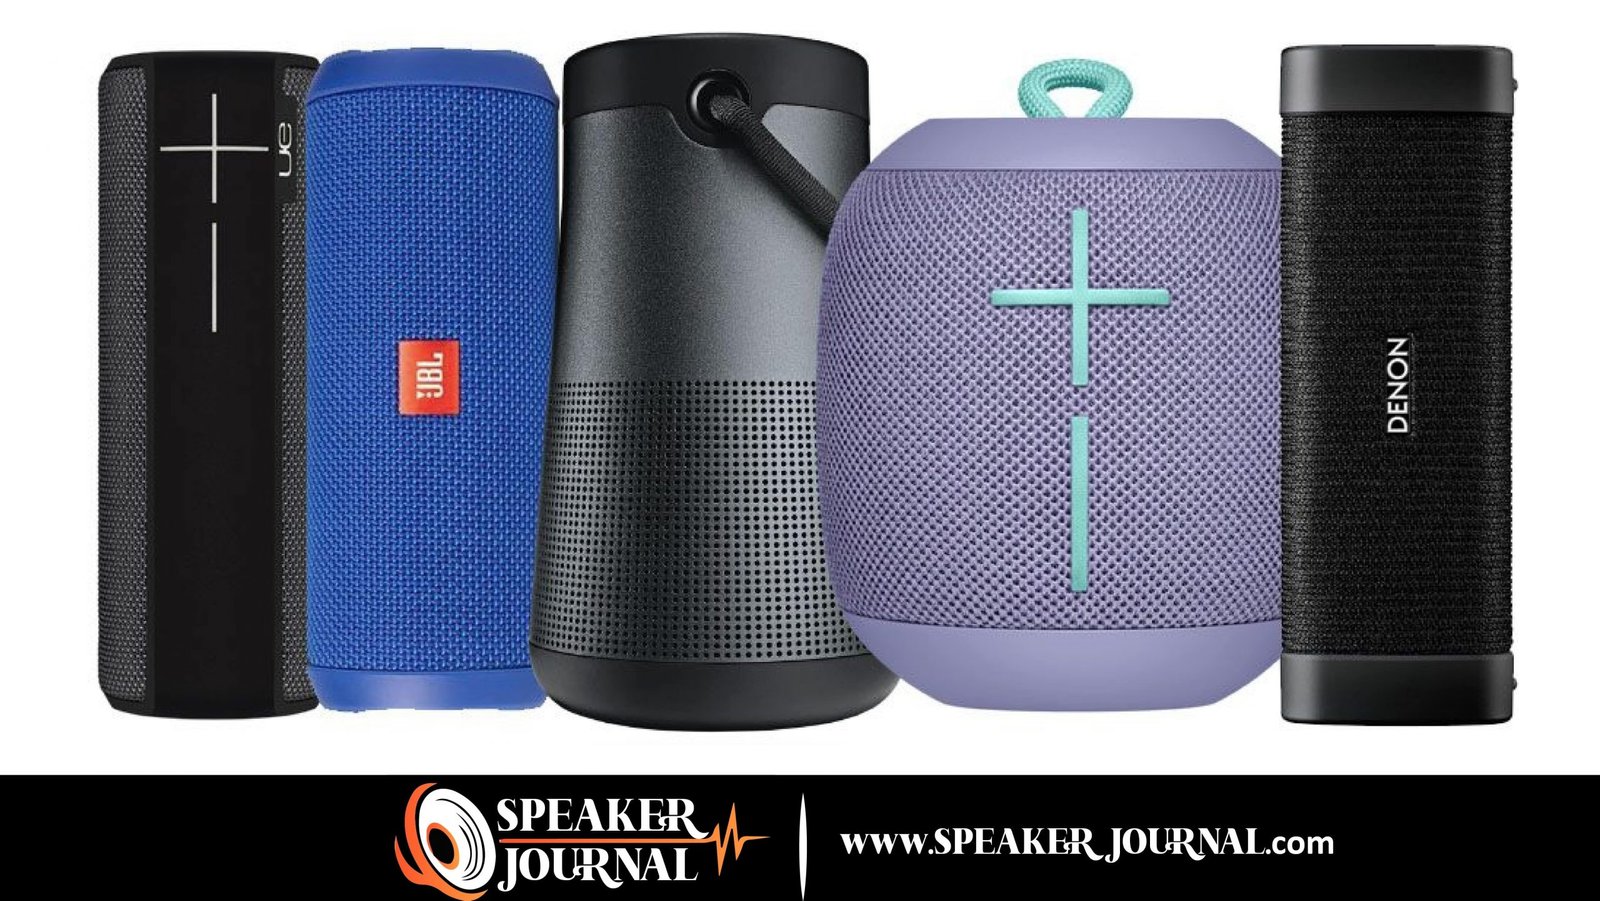 How Does A Wireless Speaker Work by speakerjournal.com